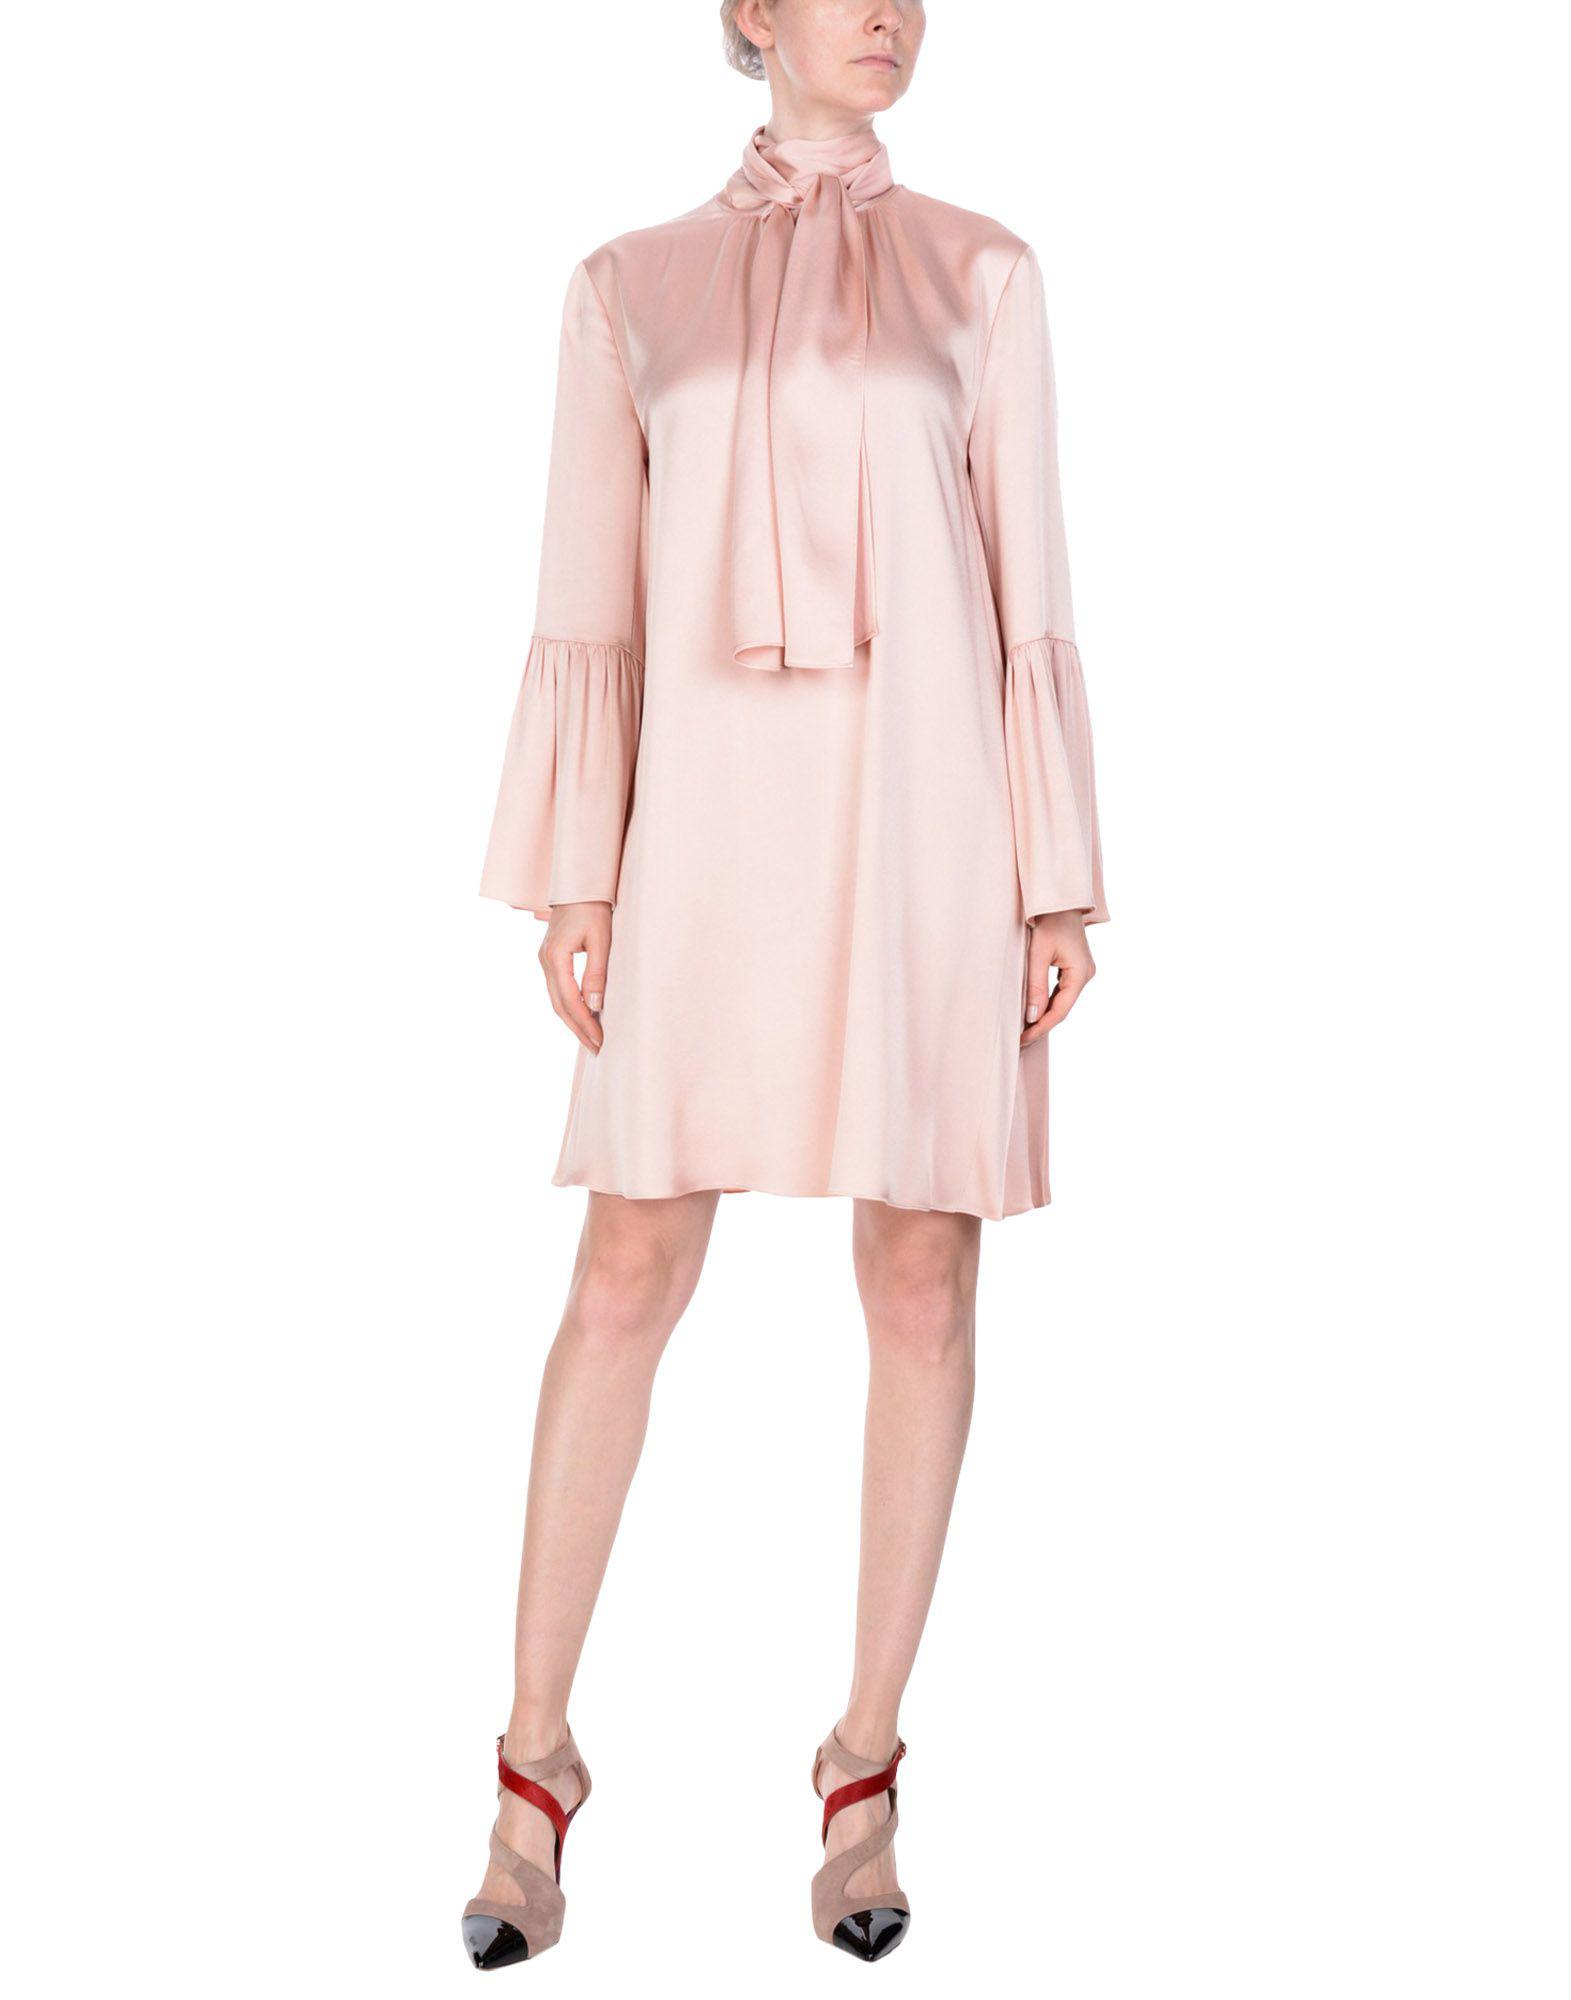 Fendi Synthetic Short Dress in Pink - Lyst